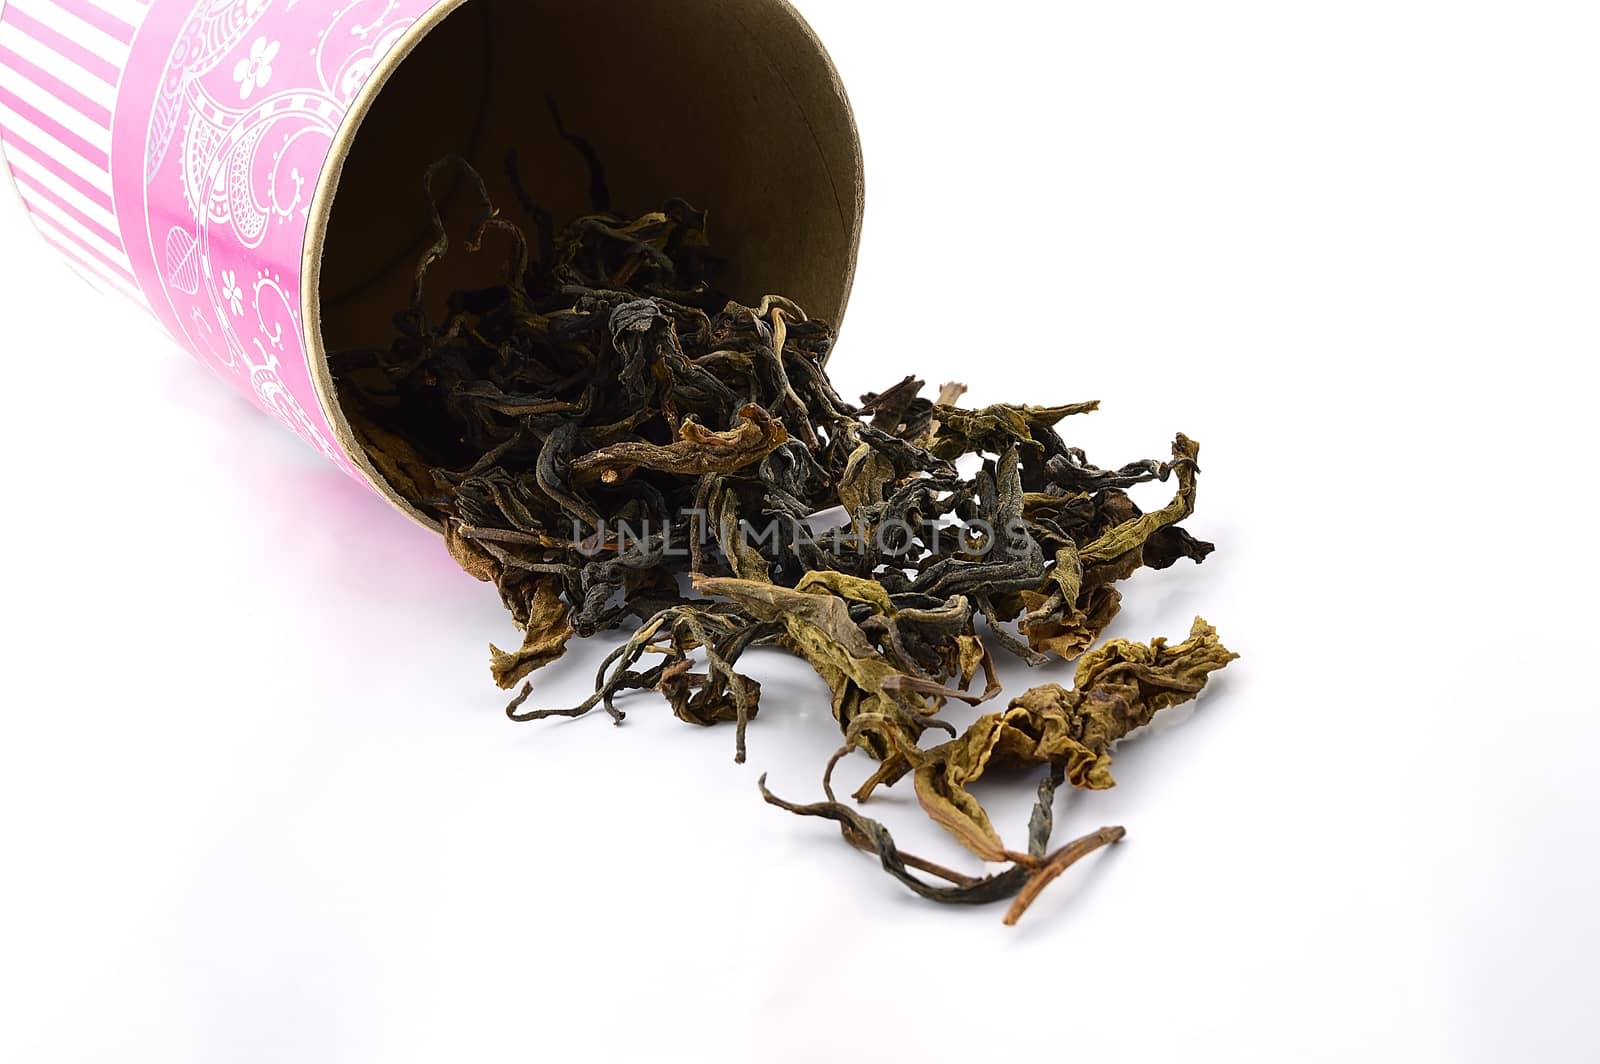 dry green tea leaves by Lekchangply